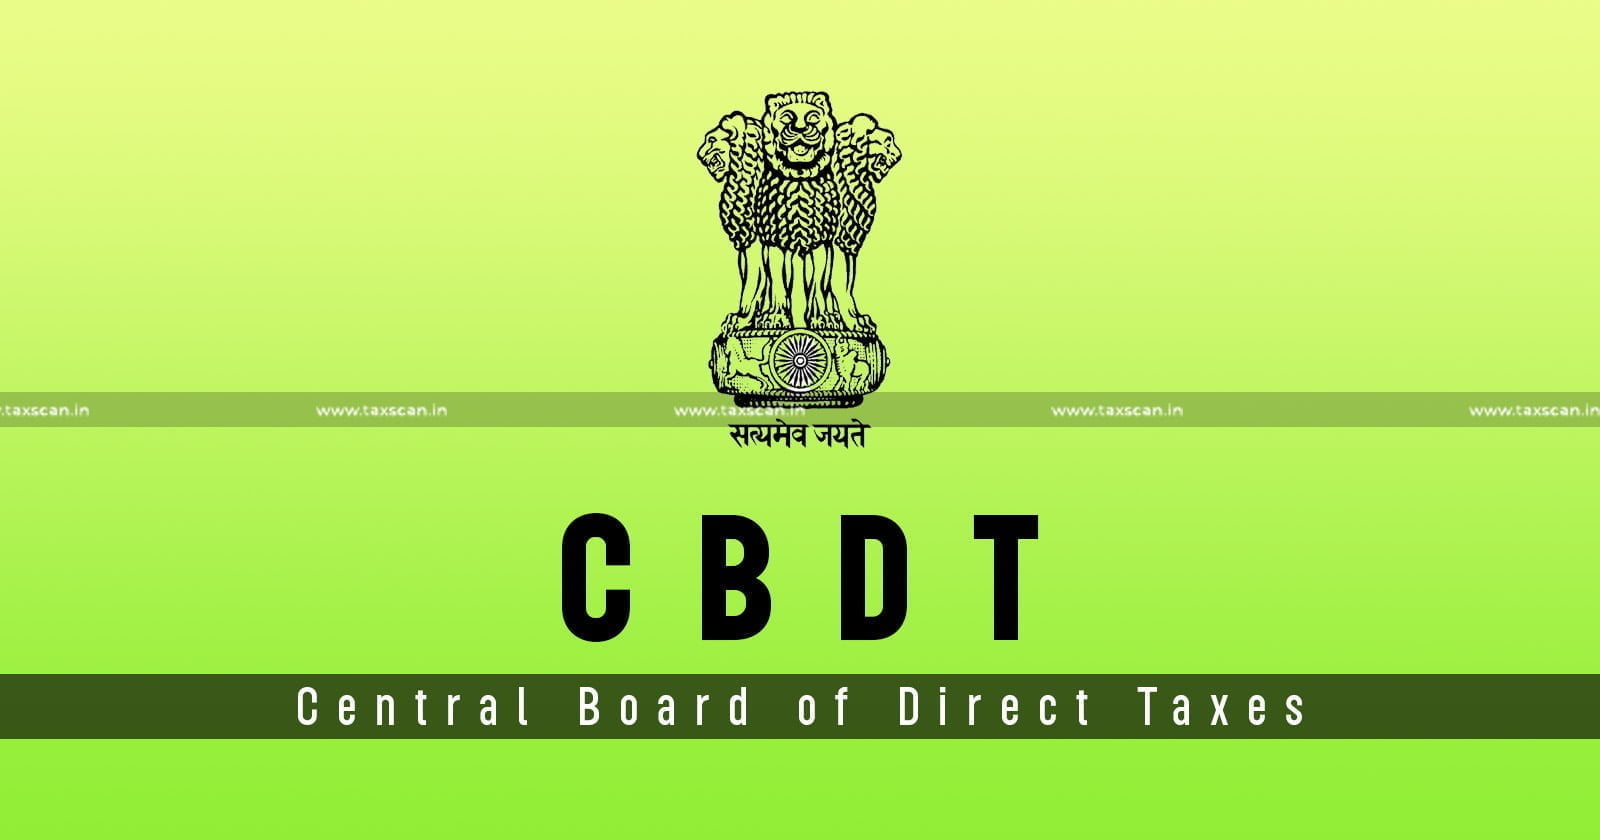 CBDT - Transactions - amendment - Transfer - Income Tax Act - taxscan